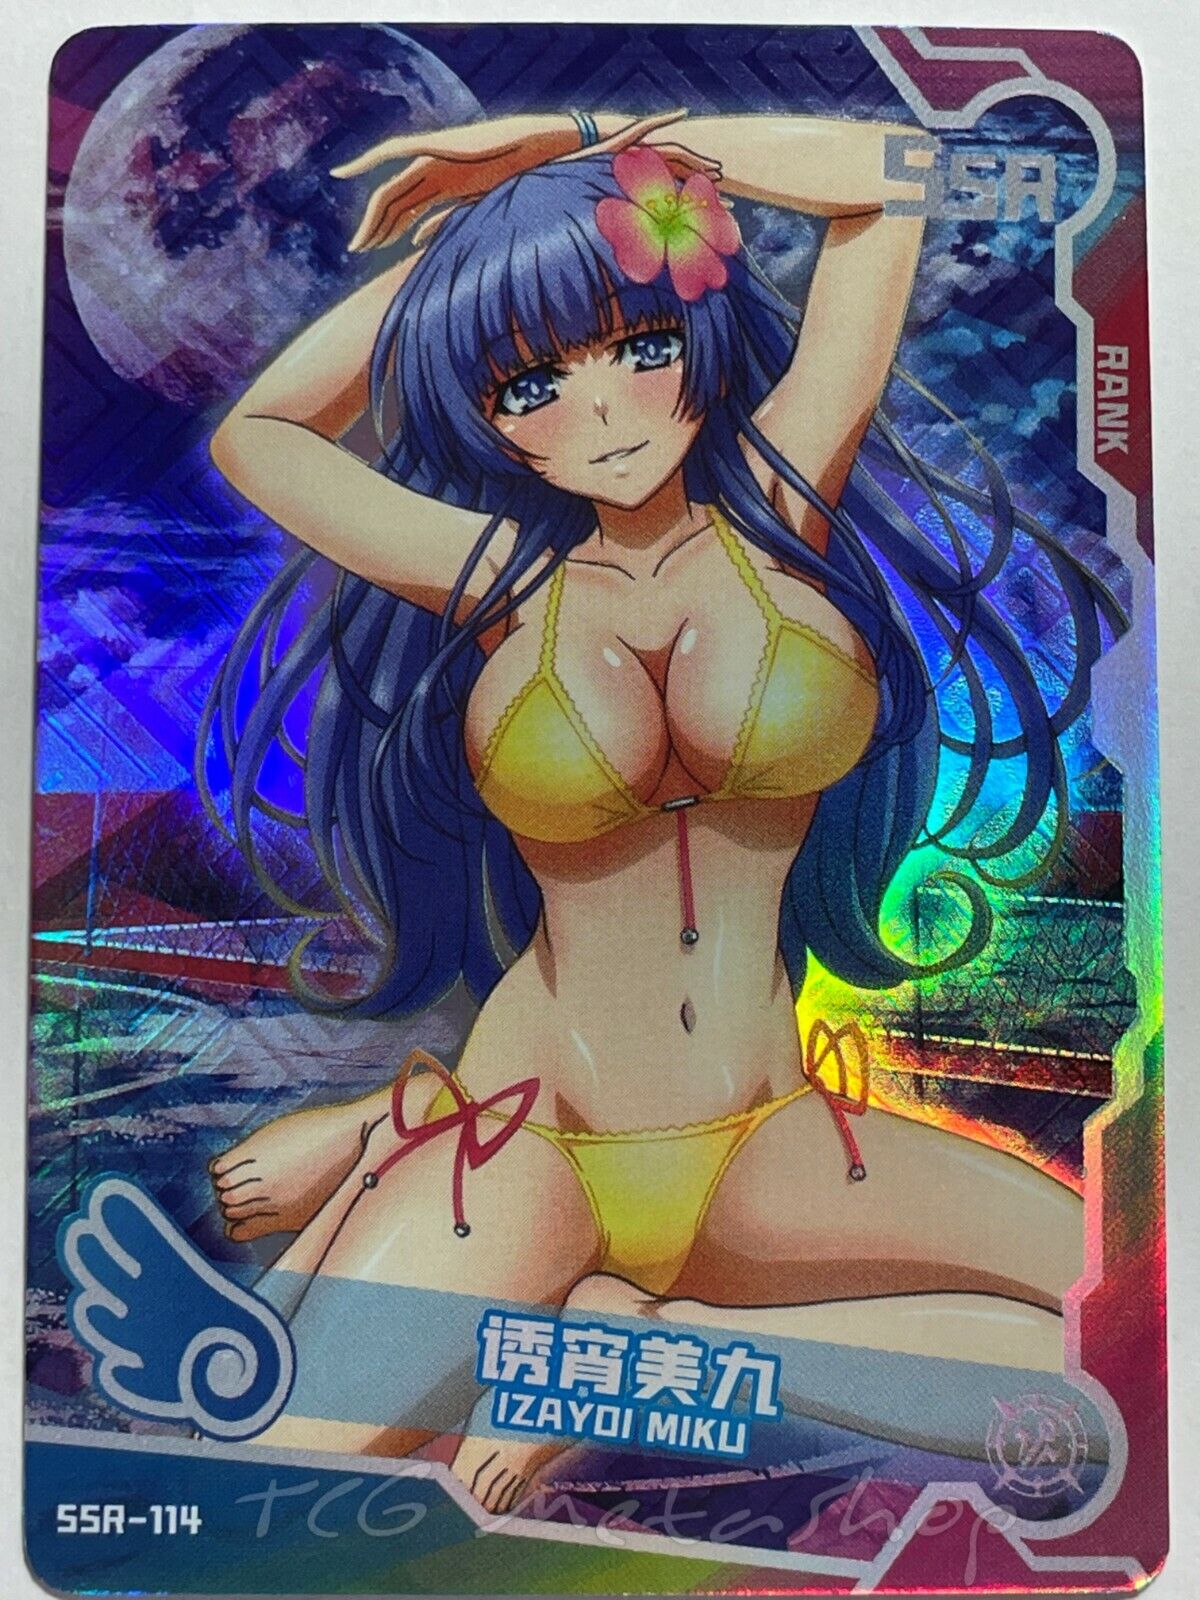 🔥 Maiden / Girl Party - Goddess Story [SSR]- Sets 1 & 3 - Bikini Anime Cards 🔥